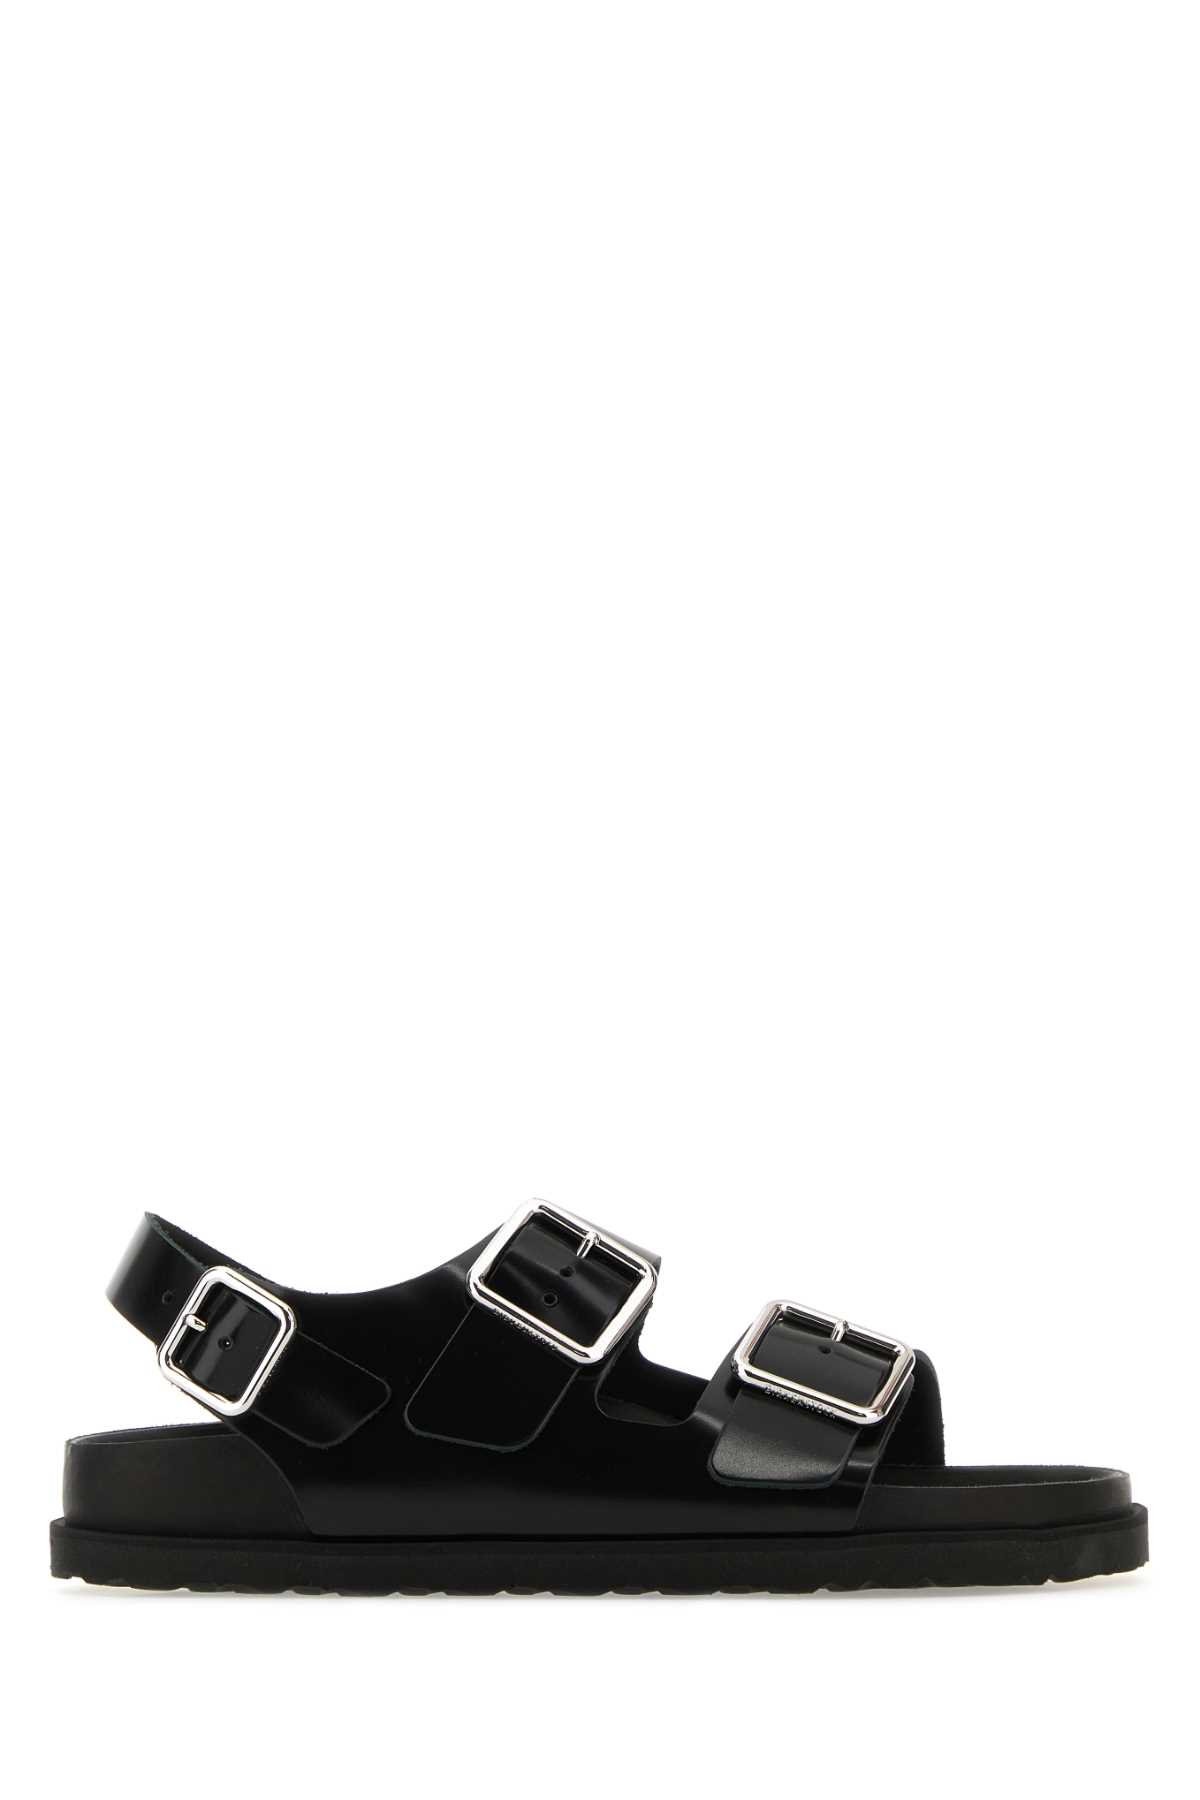 Shop Birkenstock Black Leather Milano Avantgarde Sandals